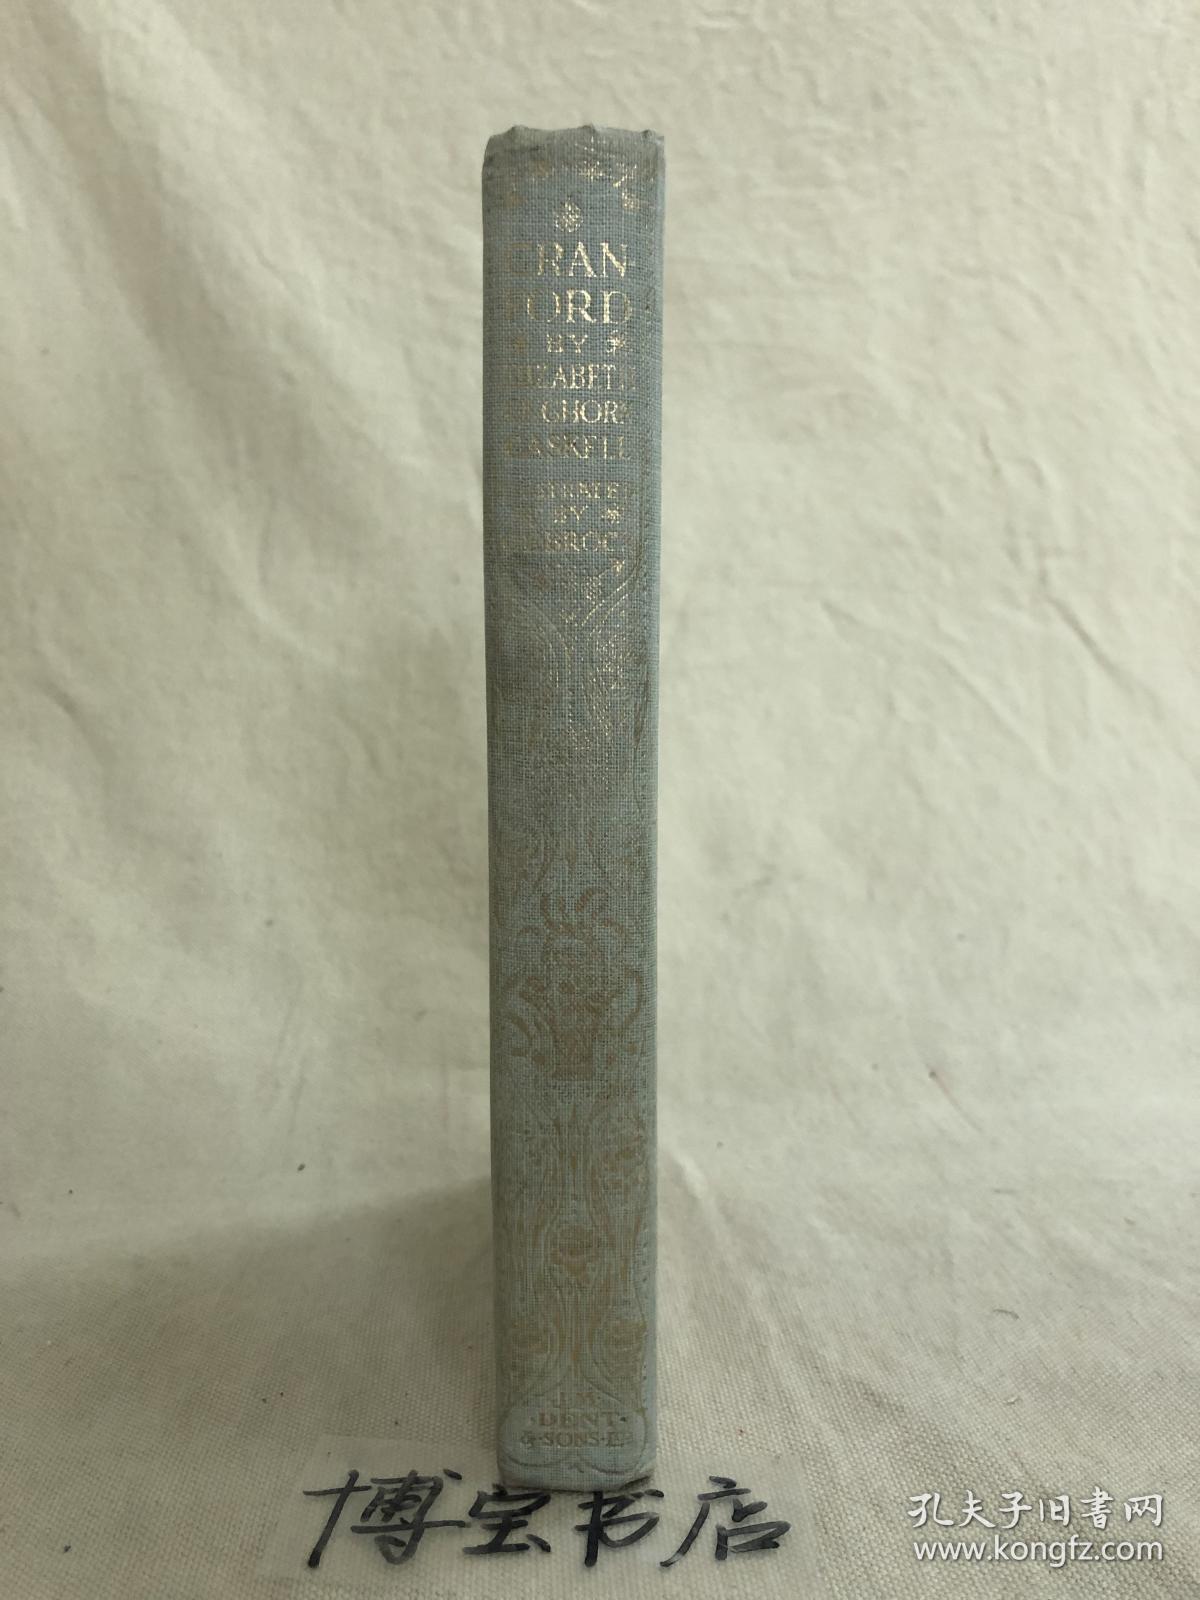 Cranford，盖斯凯尔夫人《克兰福德》，C.B.Brock丰富插图，1932年古董书，满堂彩封面，烫金书脊